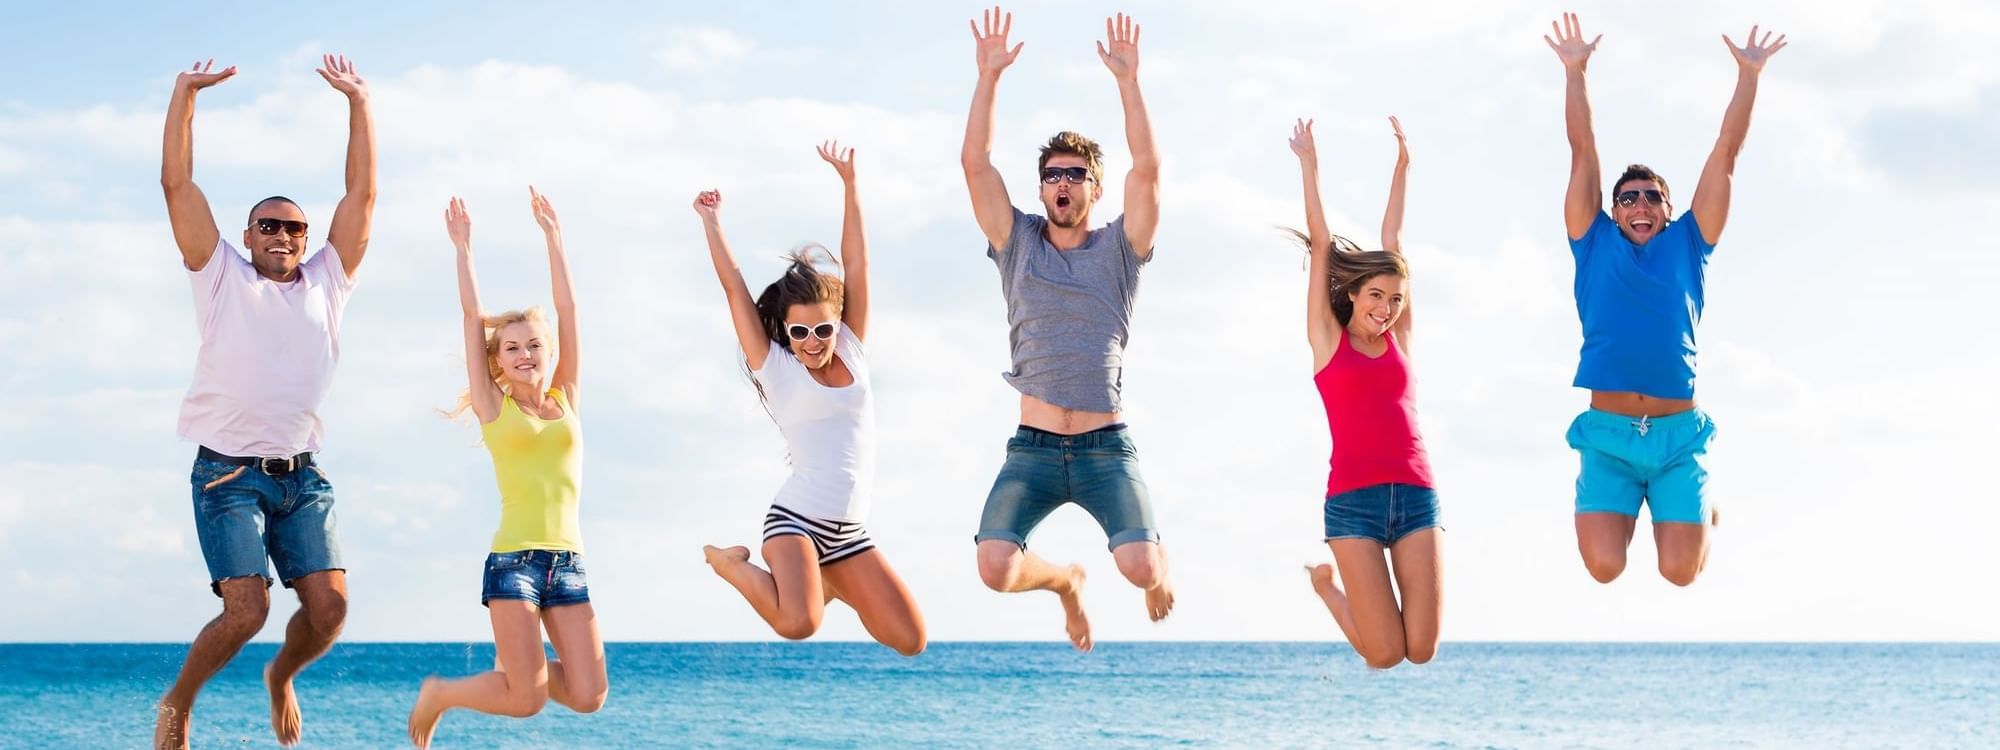 Group of friends having fun on beach at Daydream Island Resort